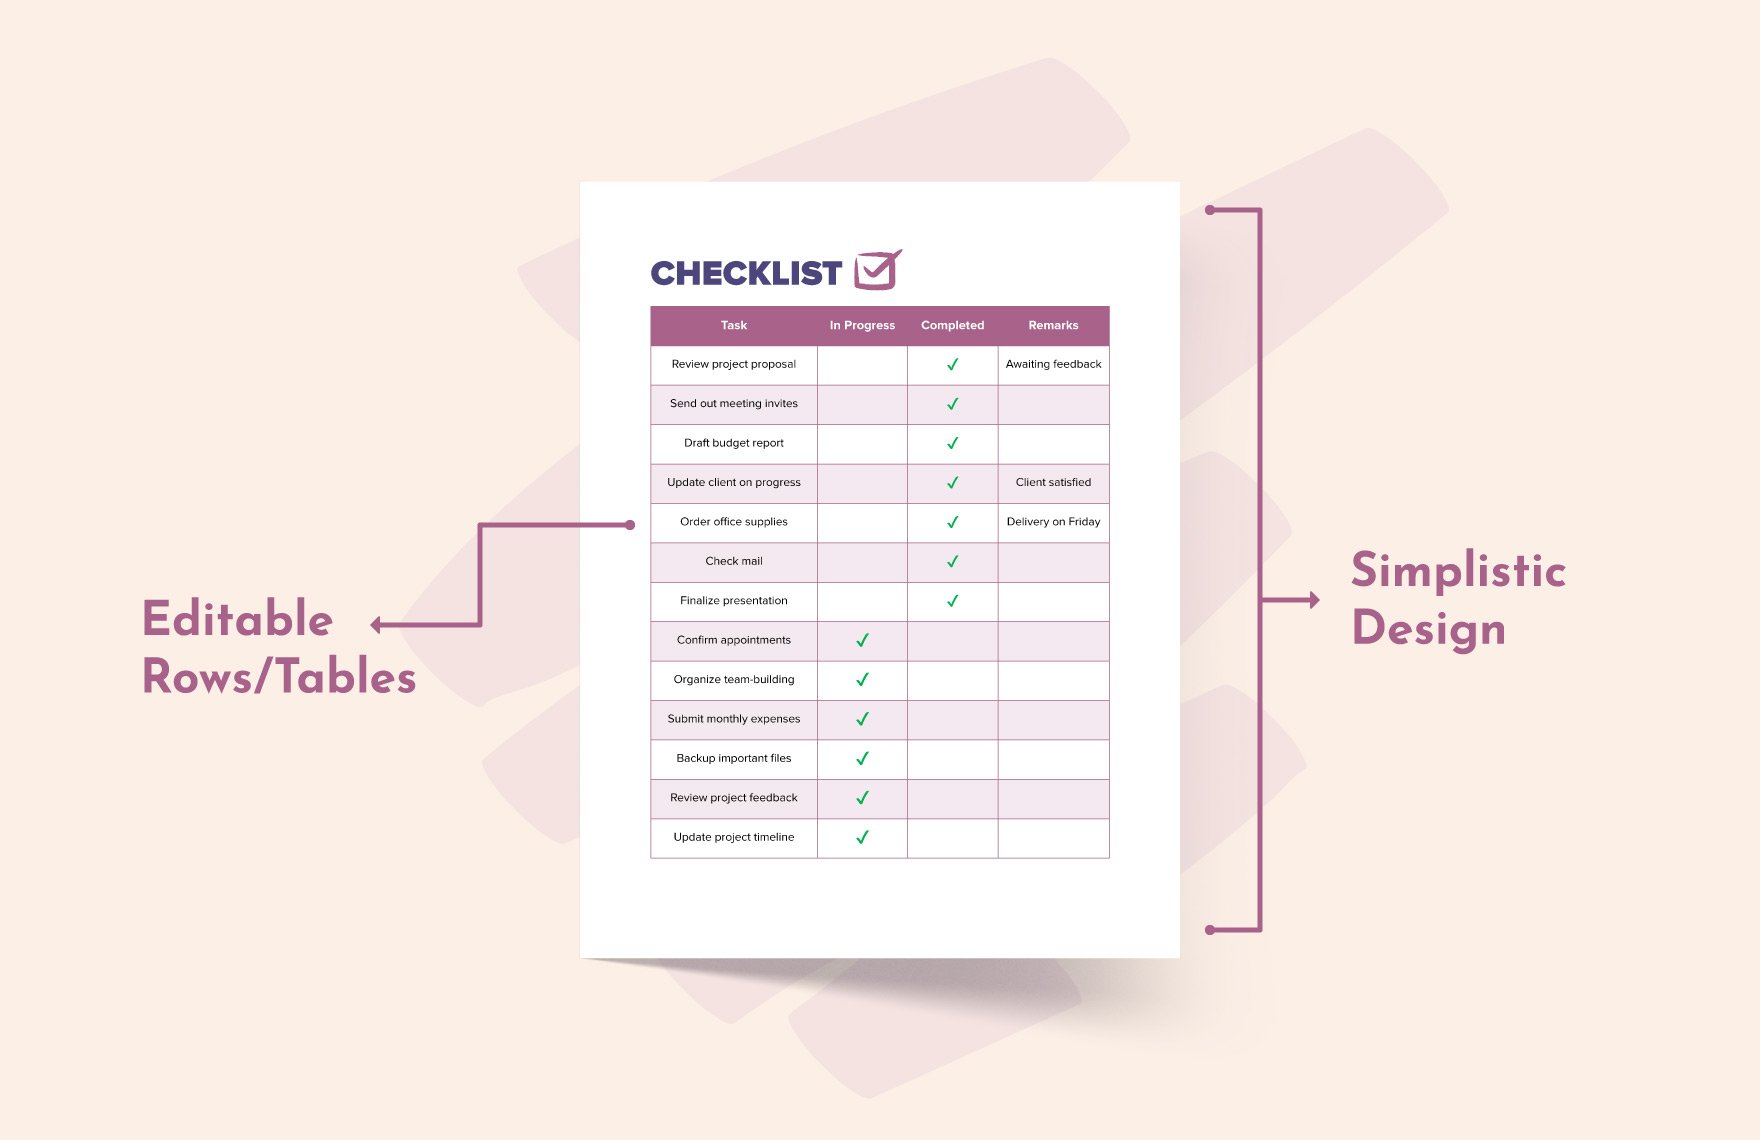 Checklist Template